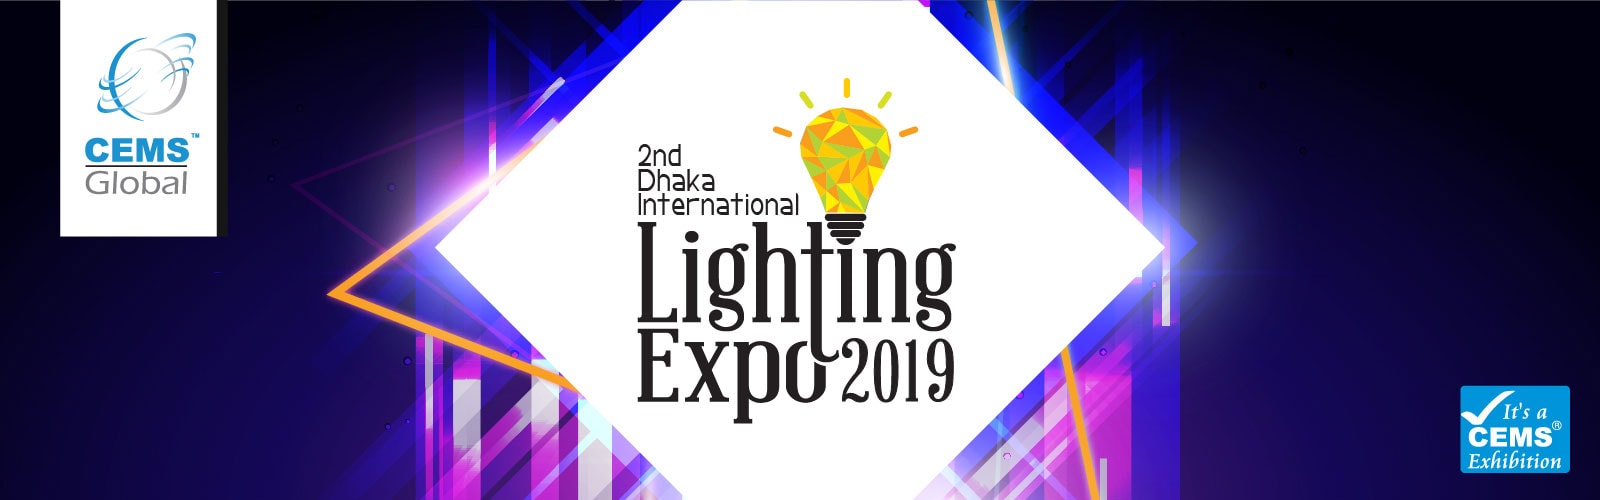  2nd Dhaka International Lighting Expo 2019